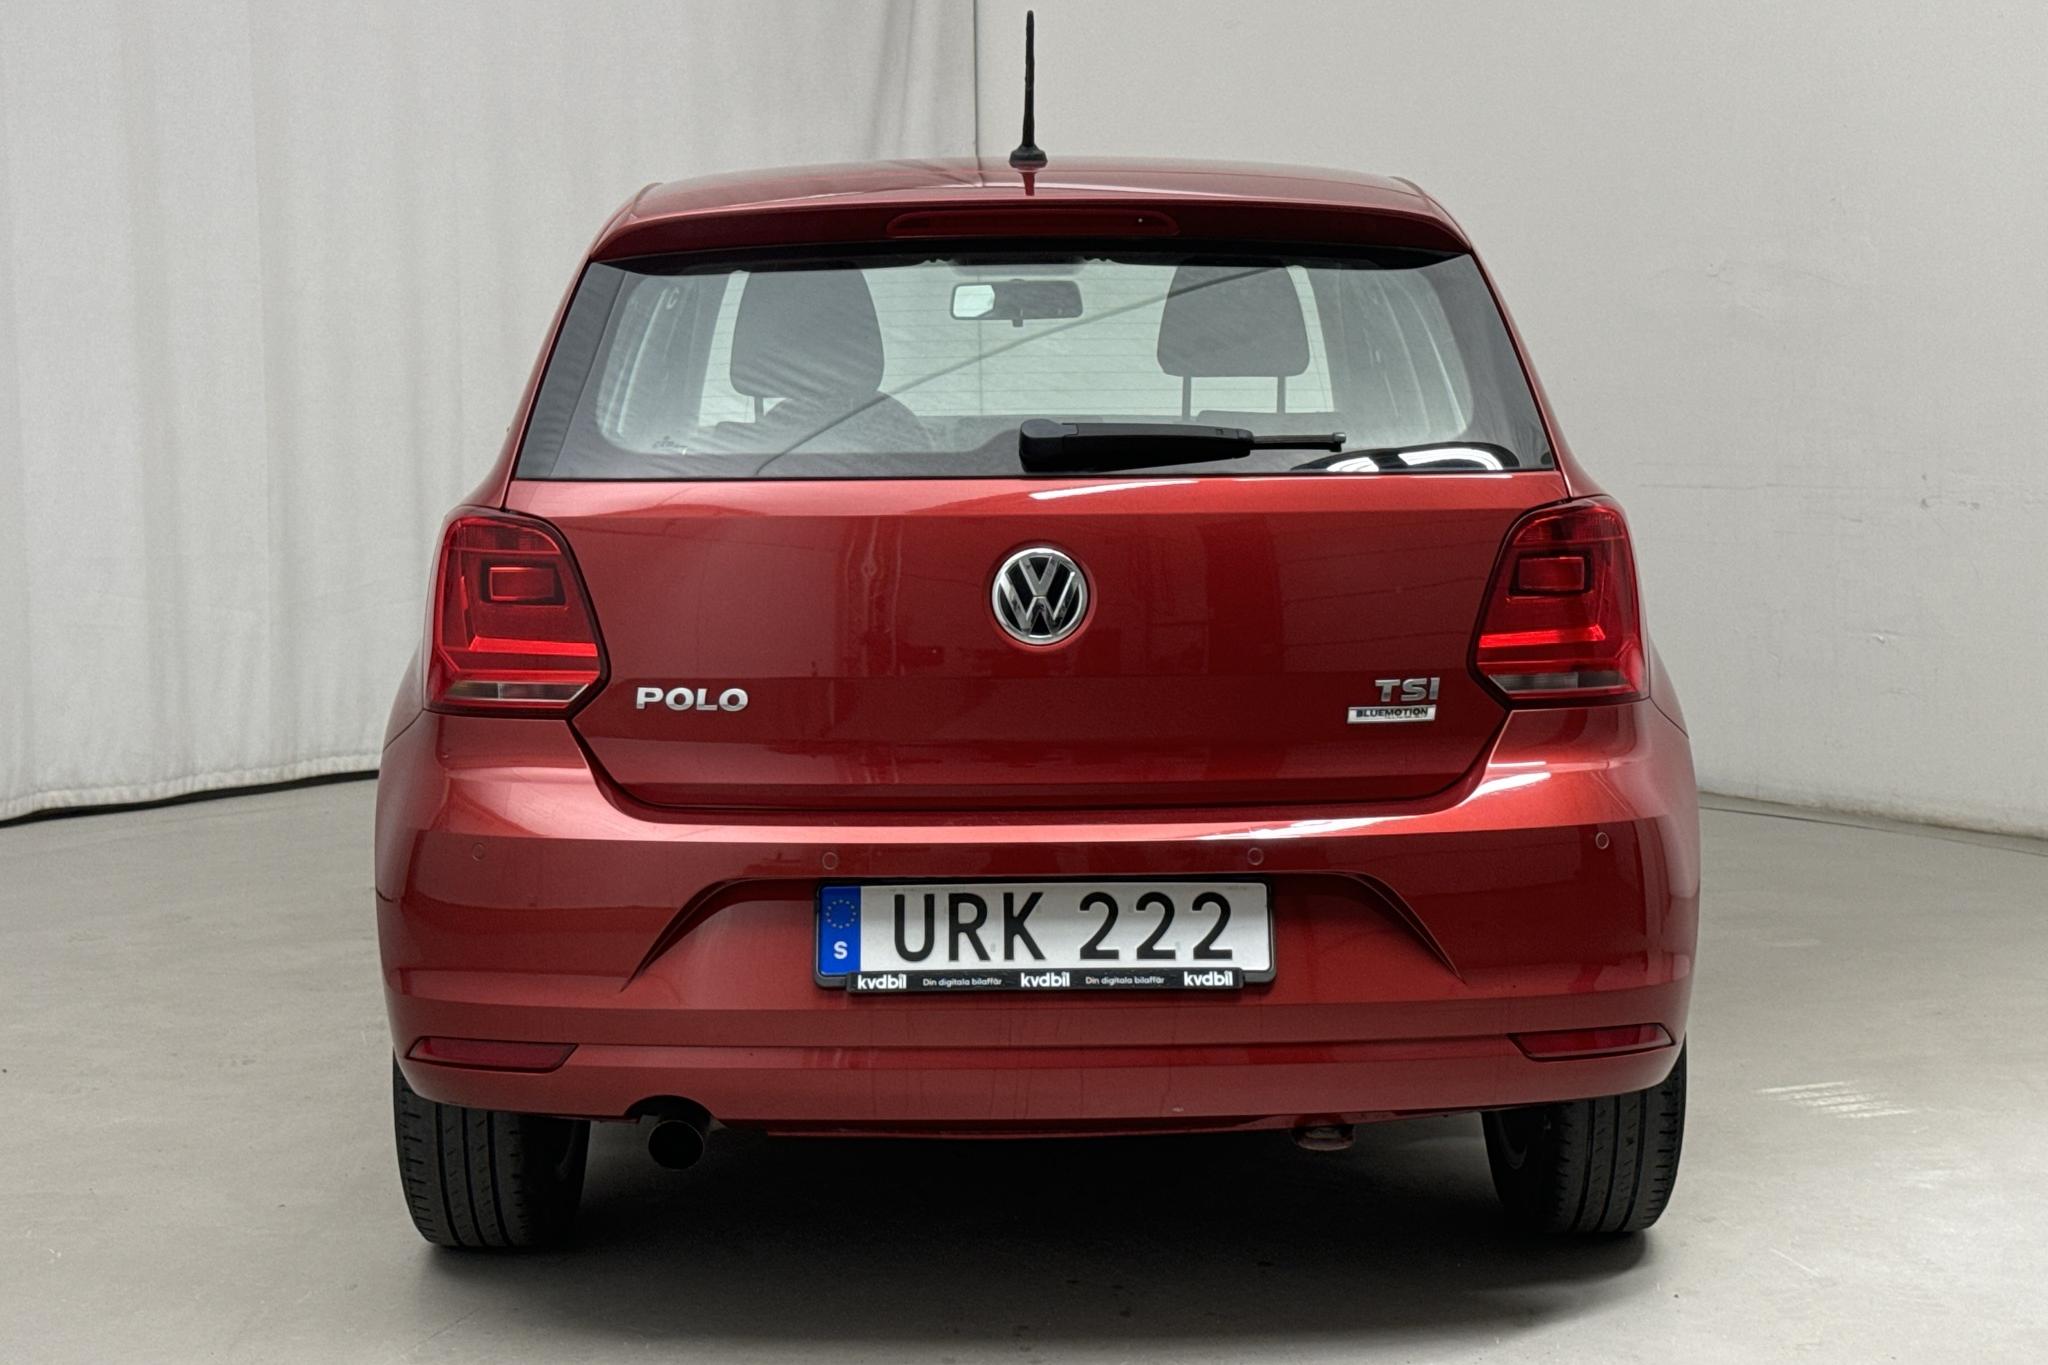 VW Polo 1.2 TSI 5dr (90hk) - 11 419 mil - Manuell - röd - 2015